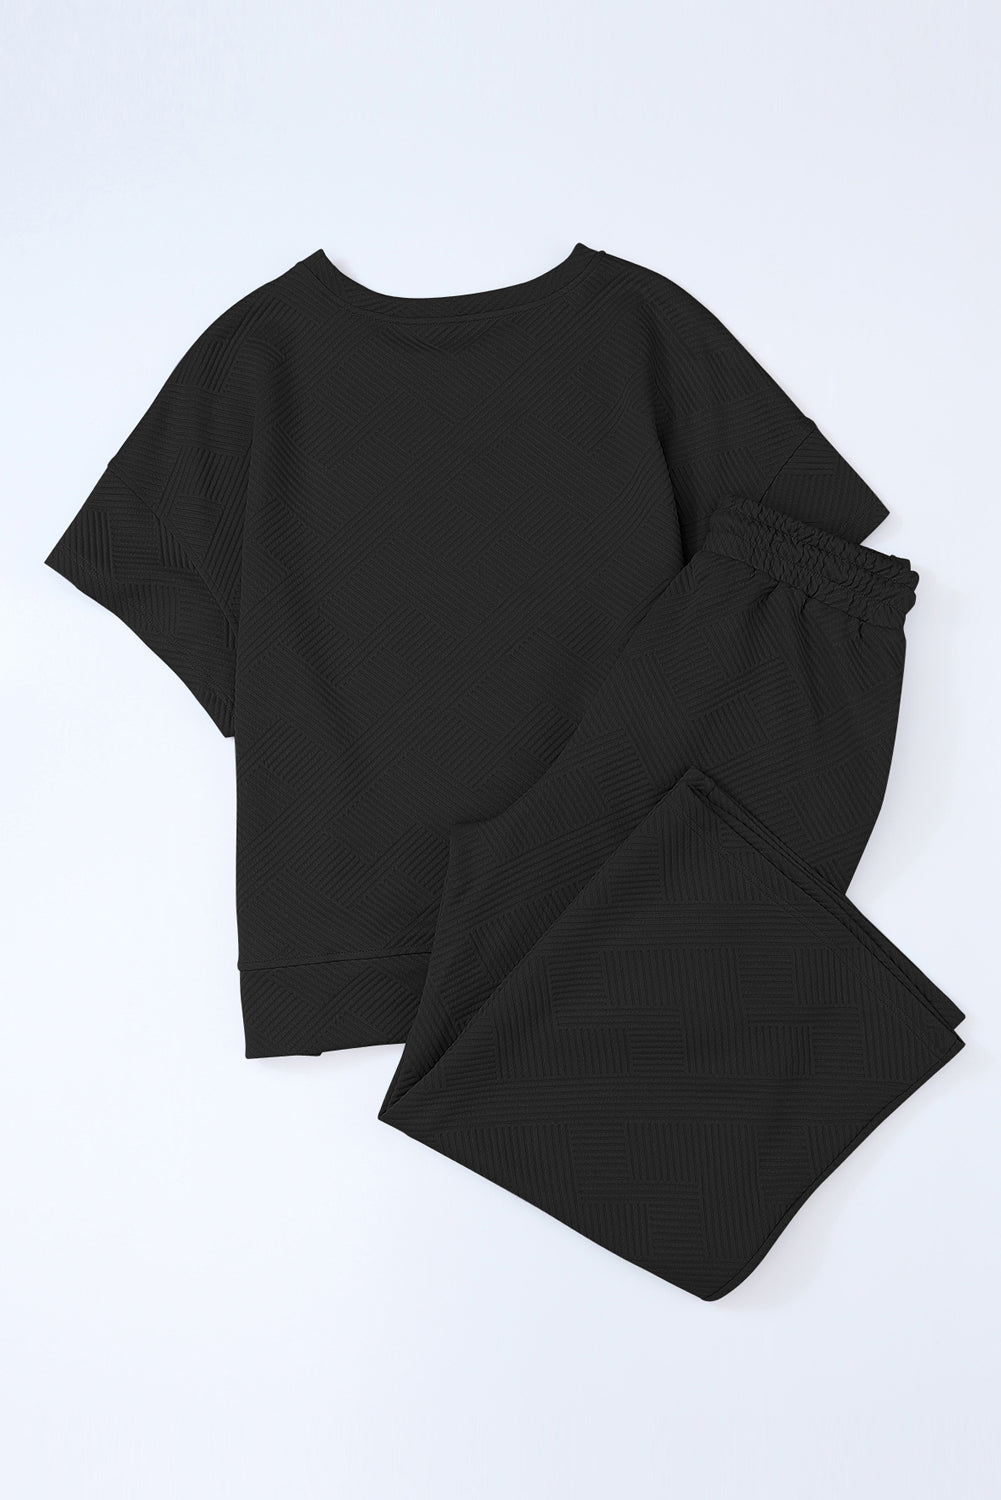 Stylish Black Women's T-Shirt & Pants Set - Relaxed Fit